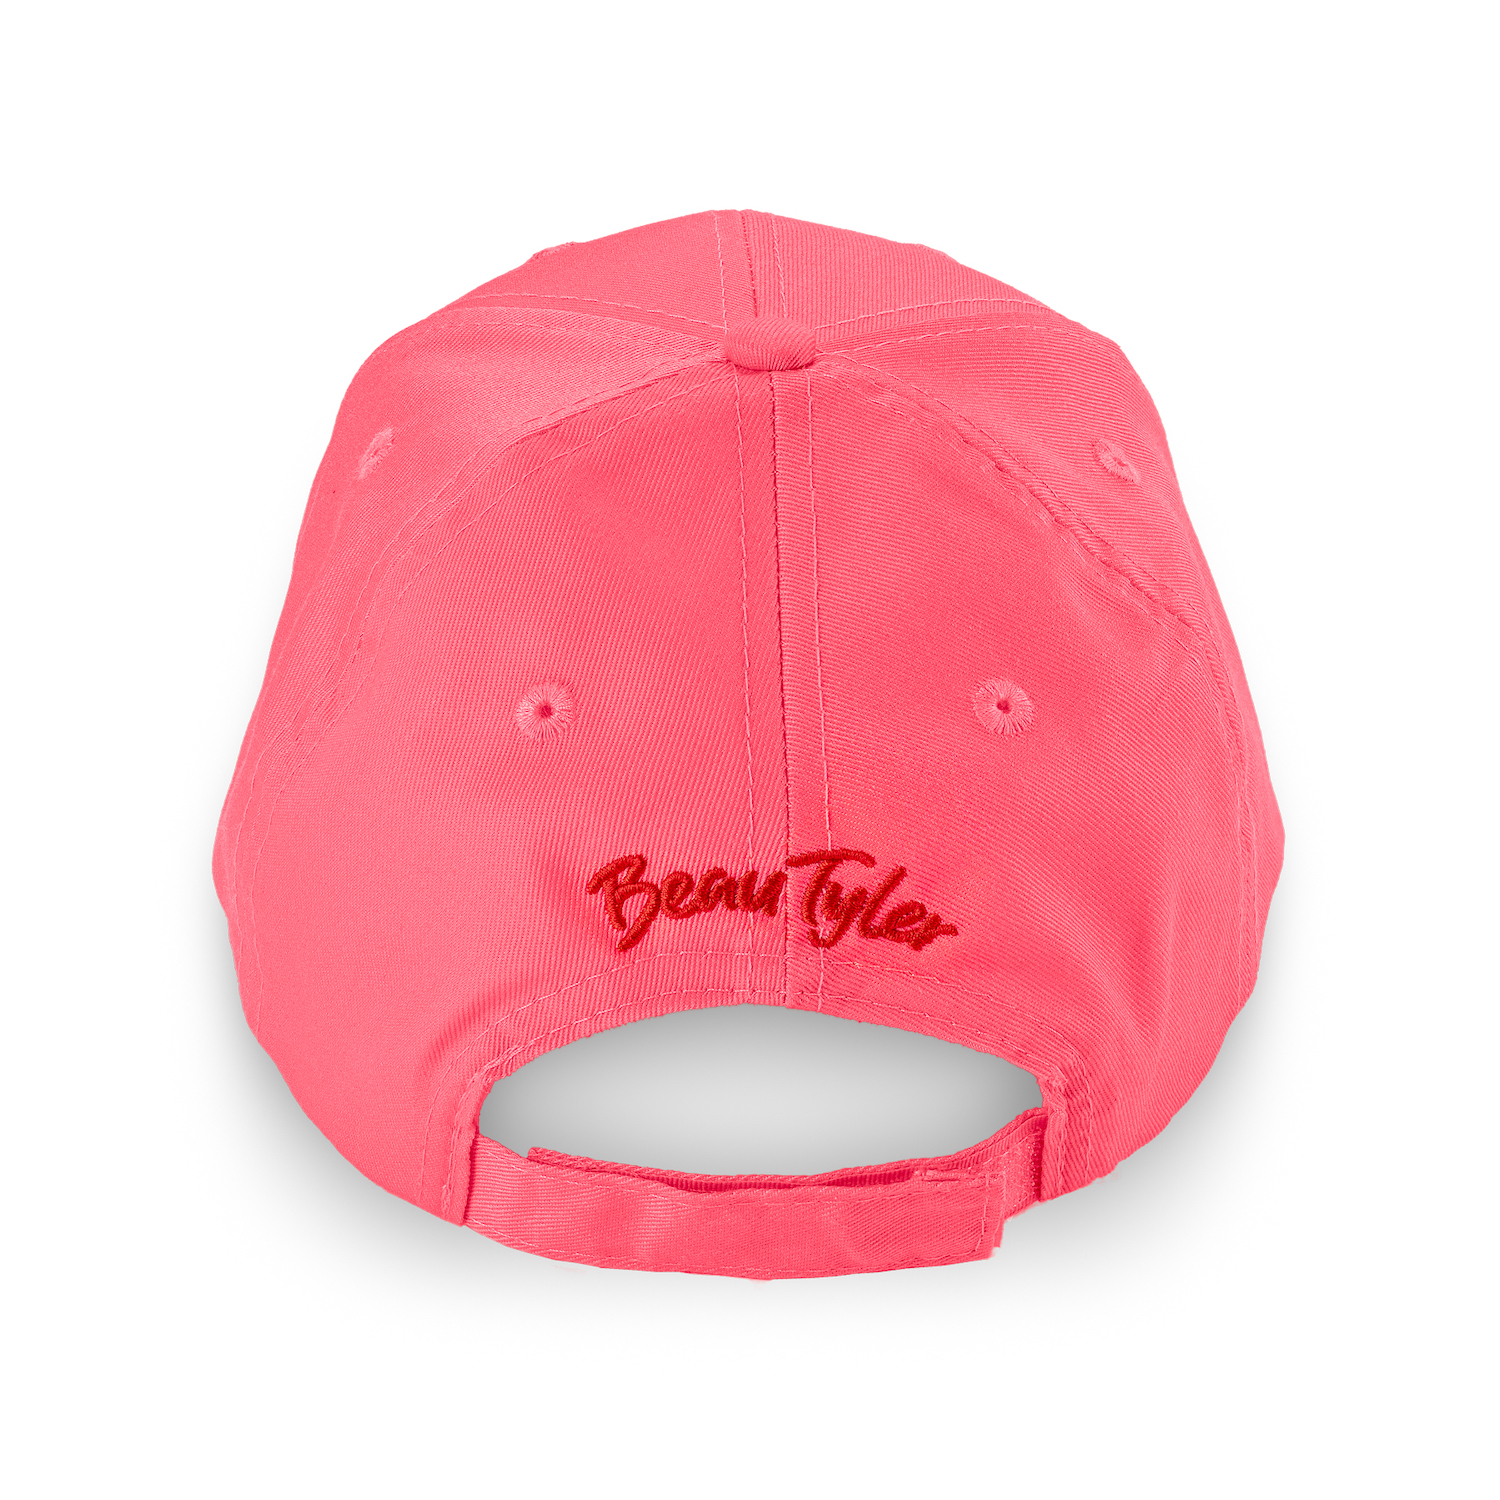 Beau Tyler - Austin hat pink back